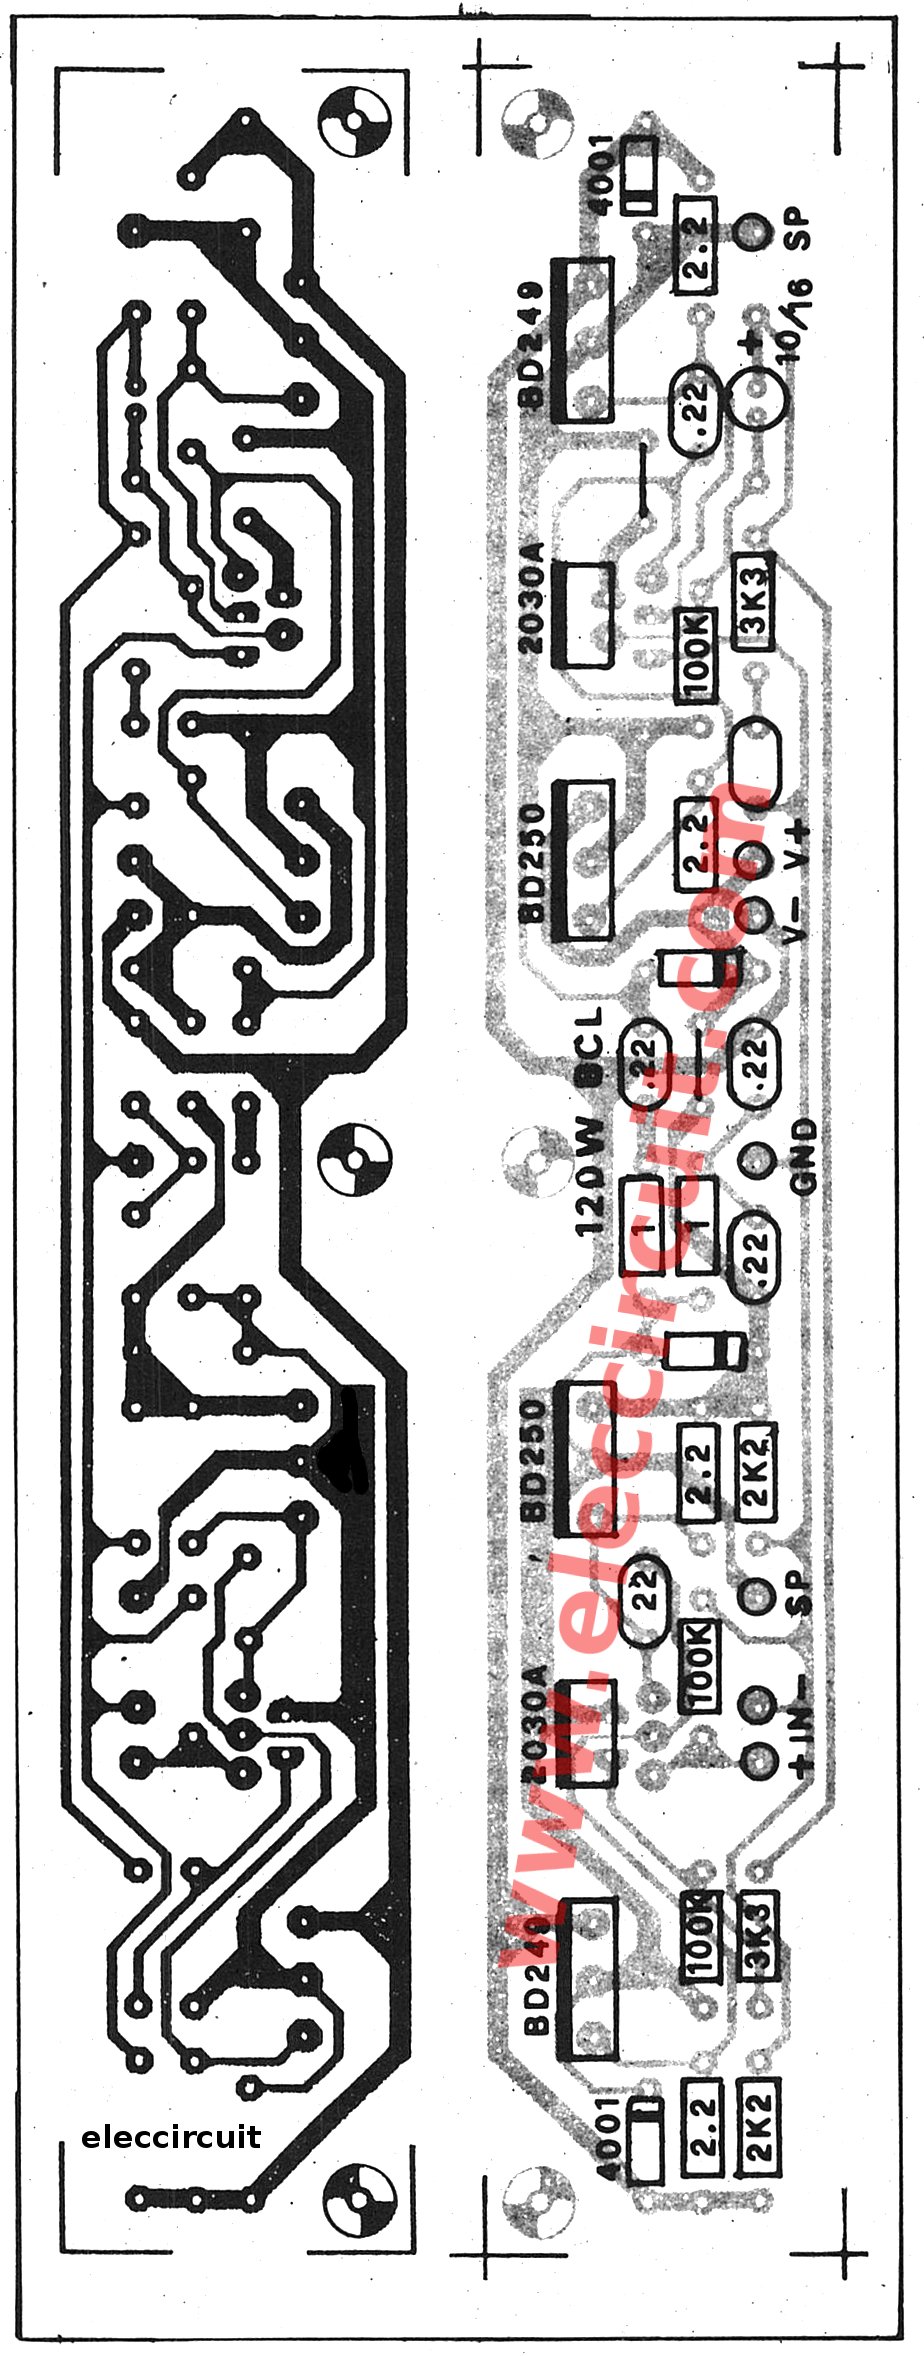 TDA2030 subwoofer amplifier circuit - ElecCircuit.com